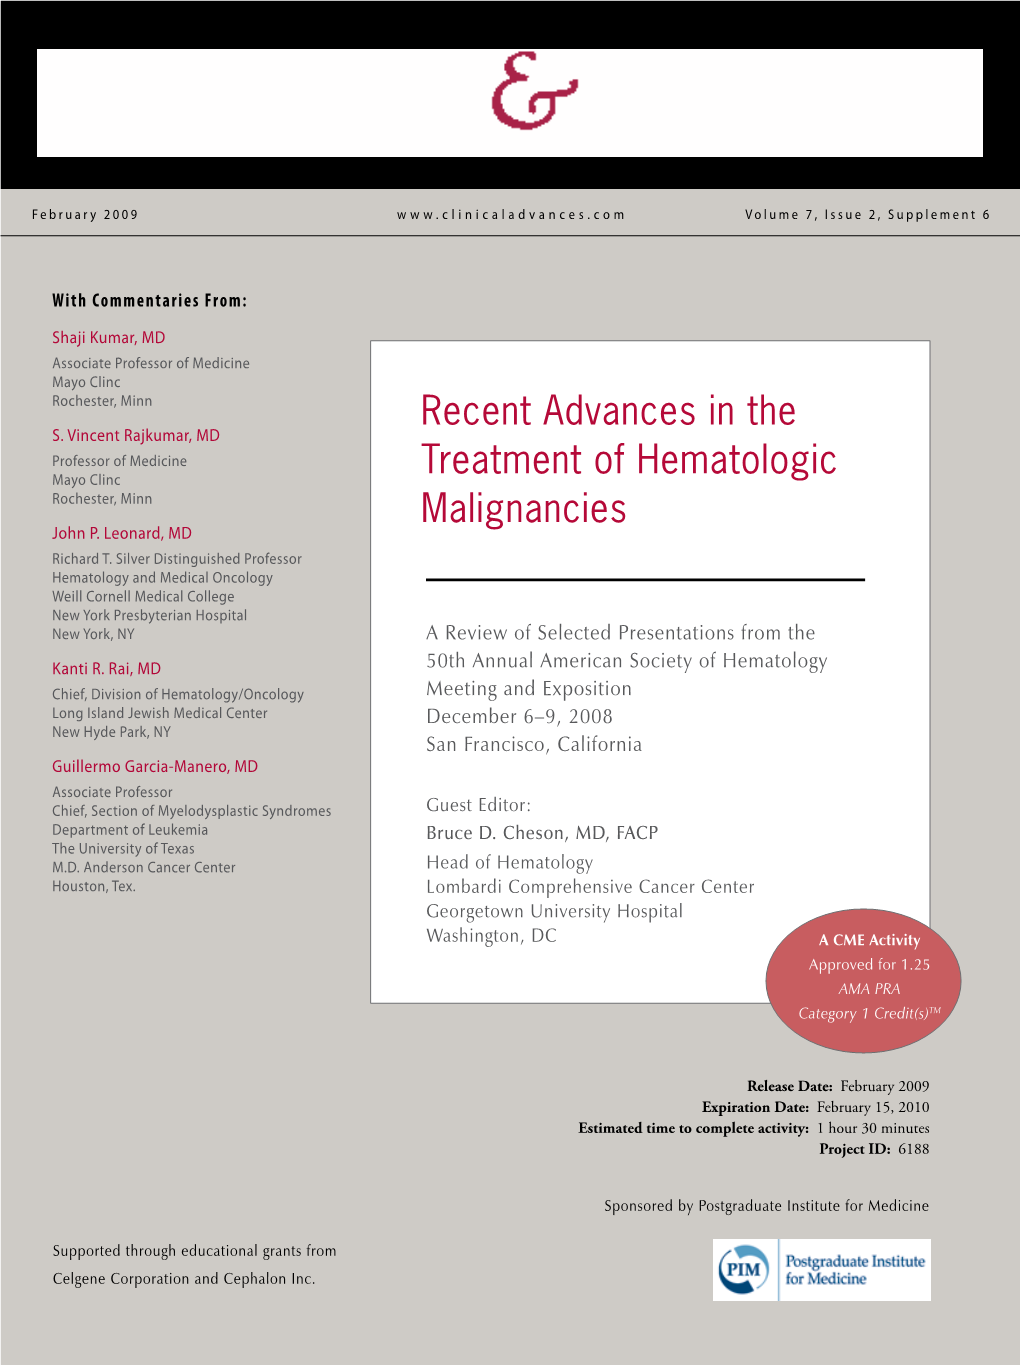 Recent Advances in the Treatment of Hematologic Malignancies